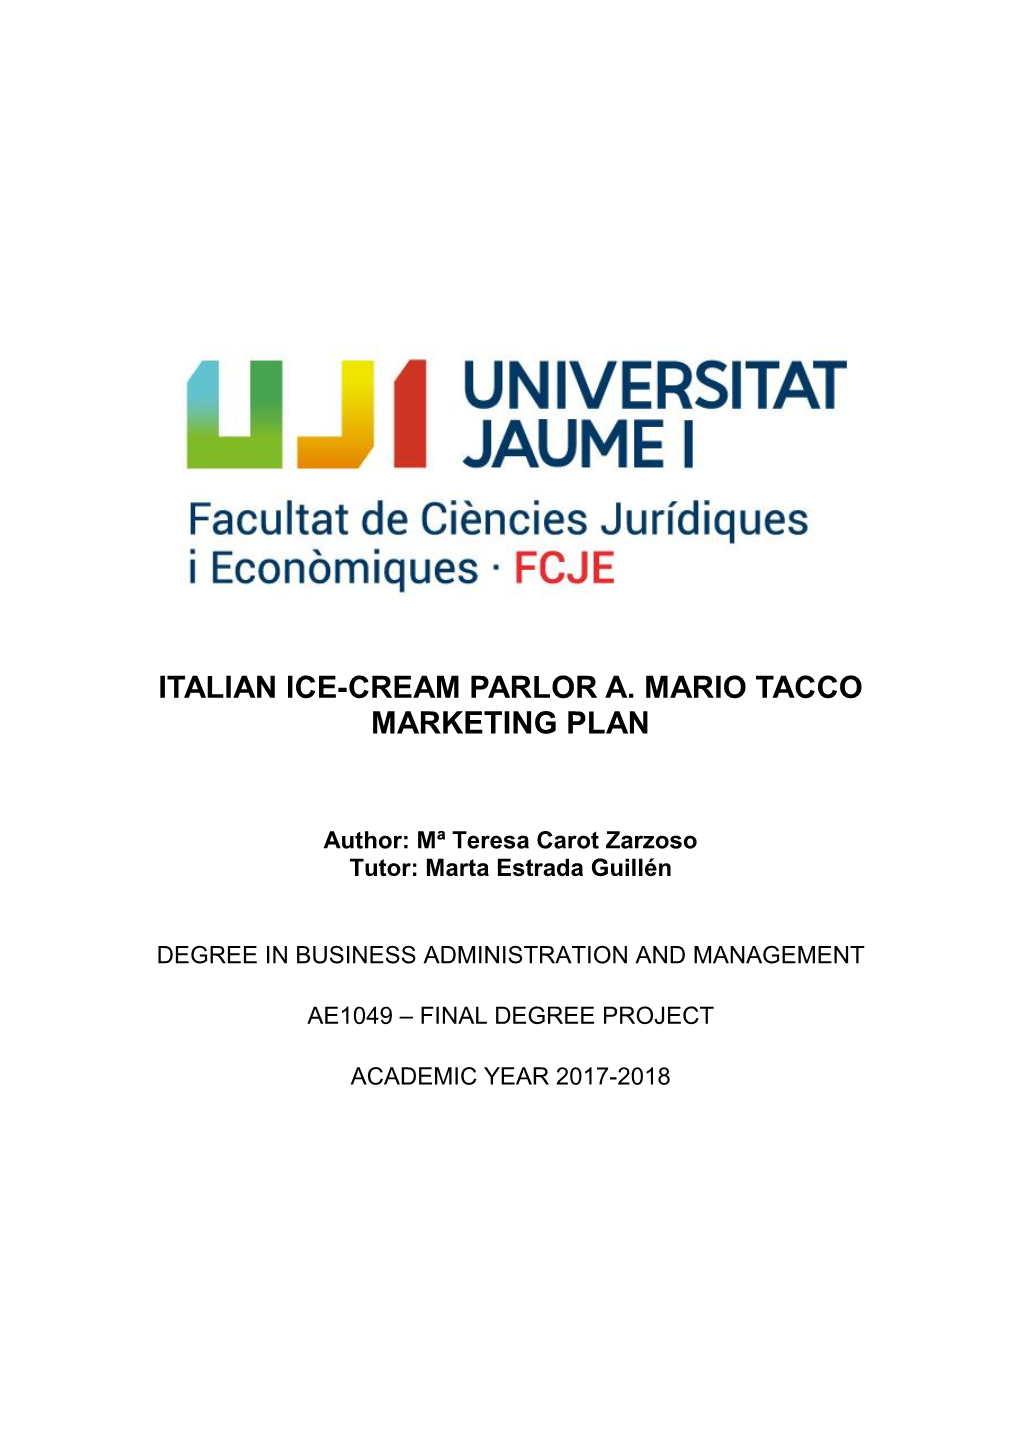 Italian Ice-Cream Parlor A. Mario Tacco Marketing Plan